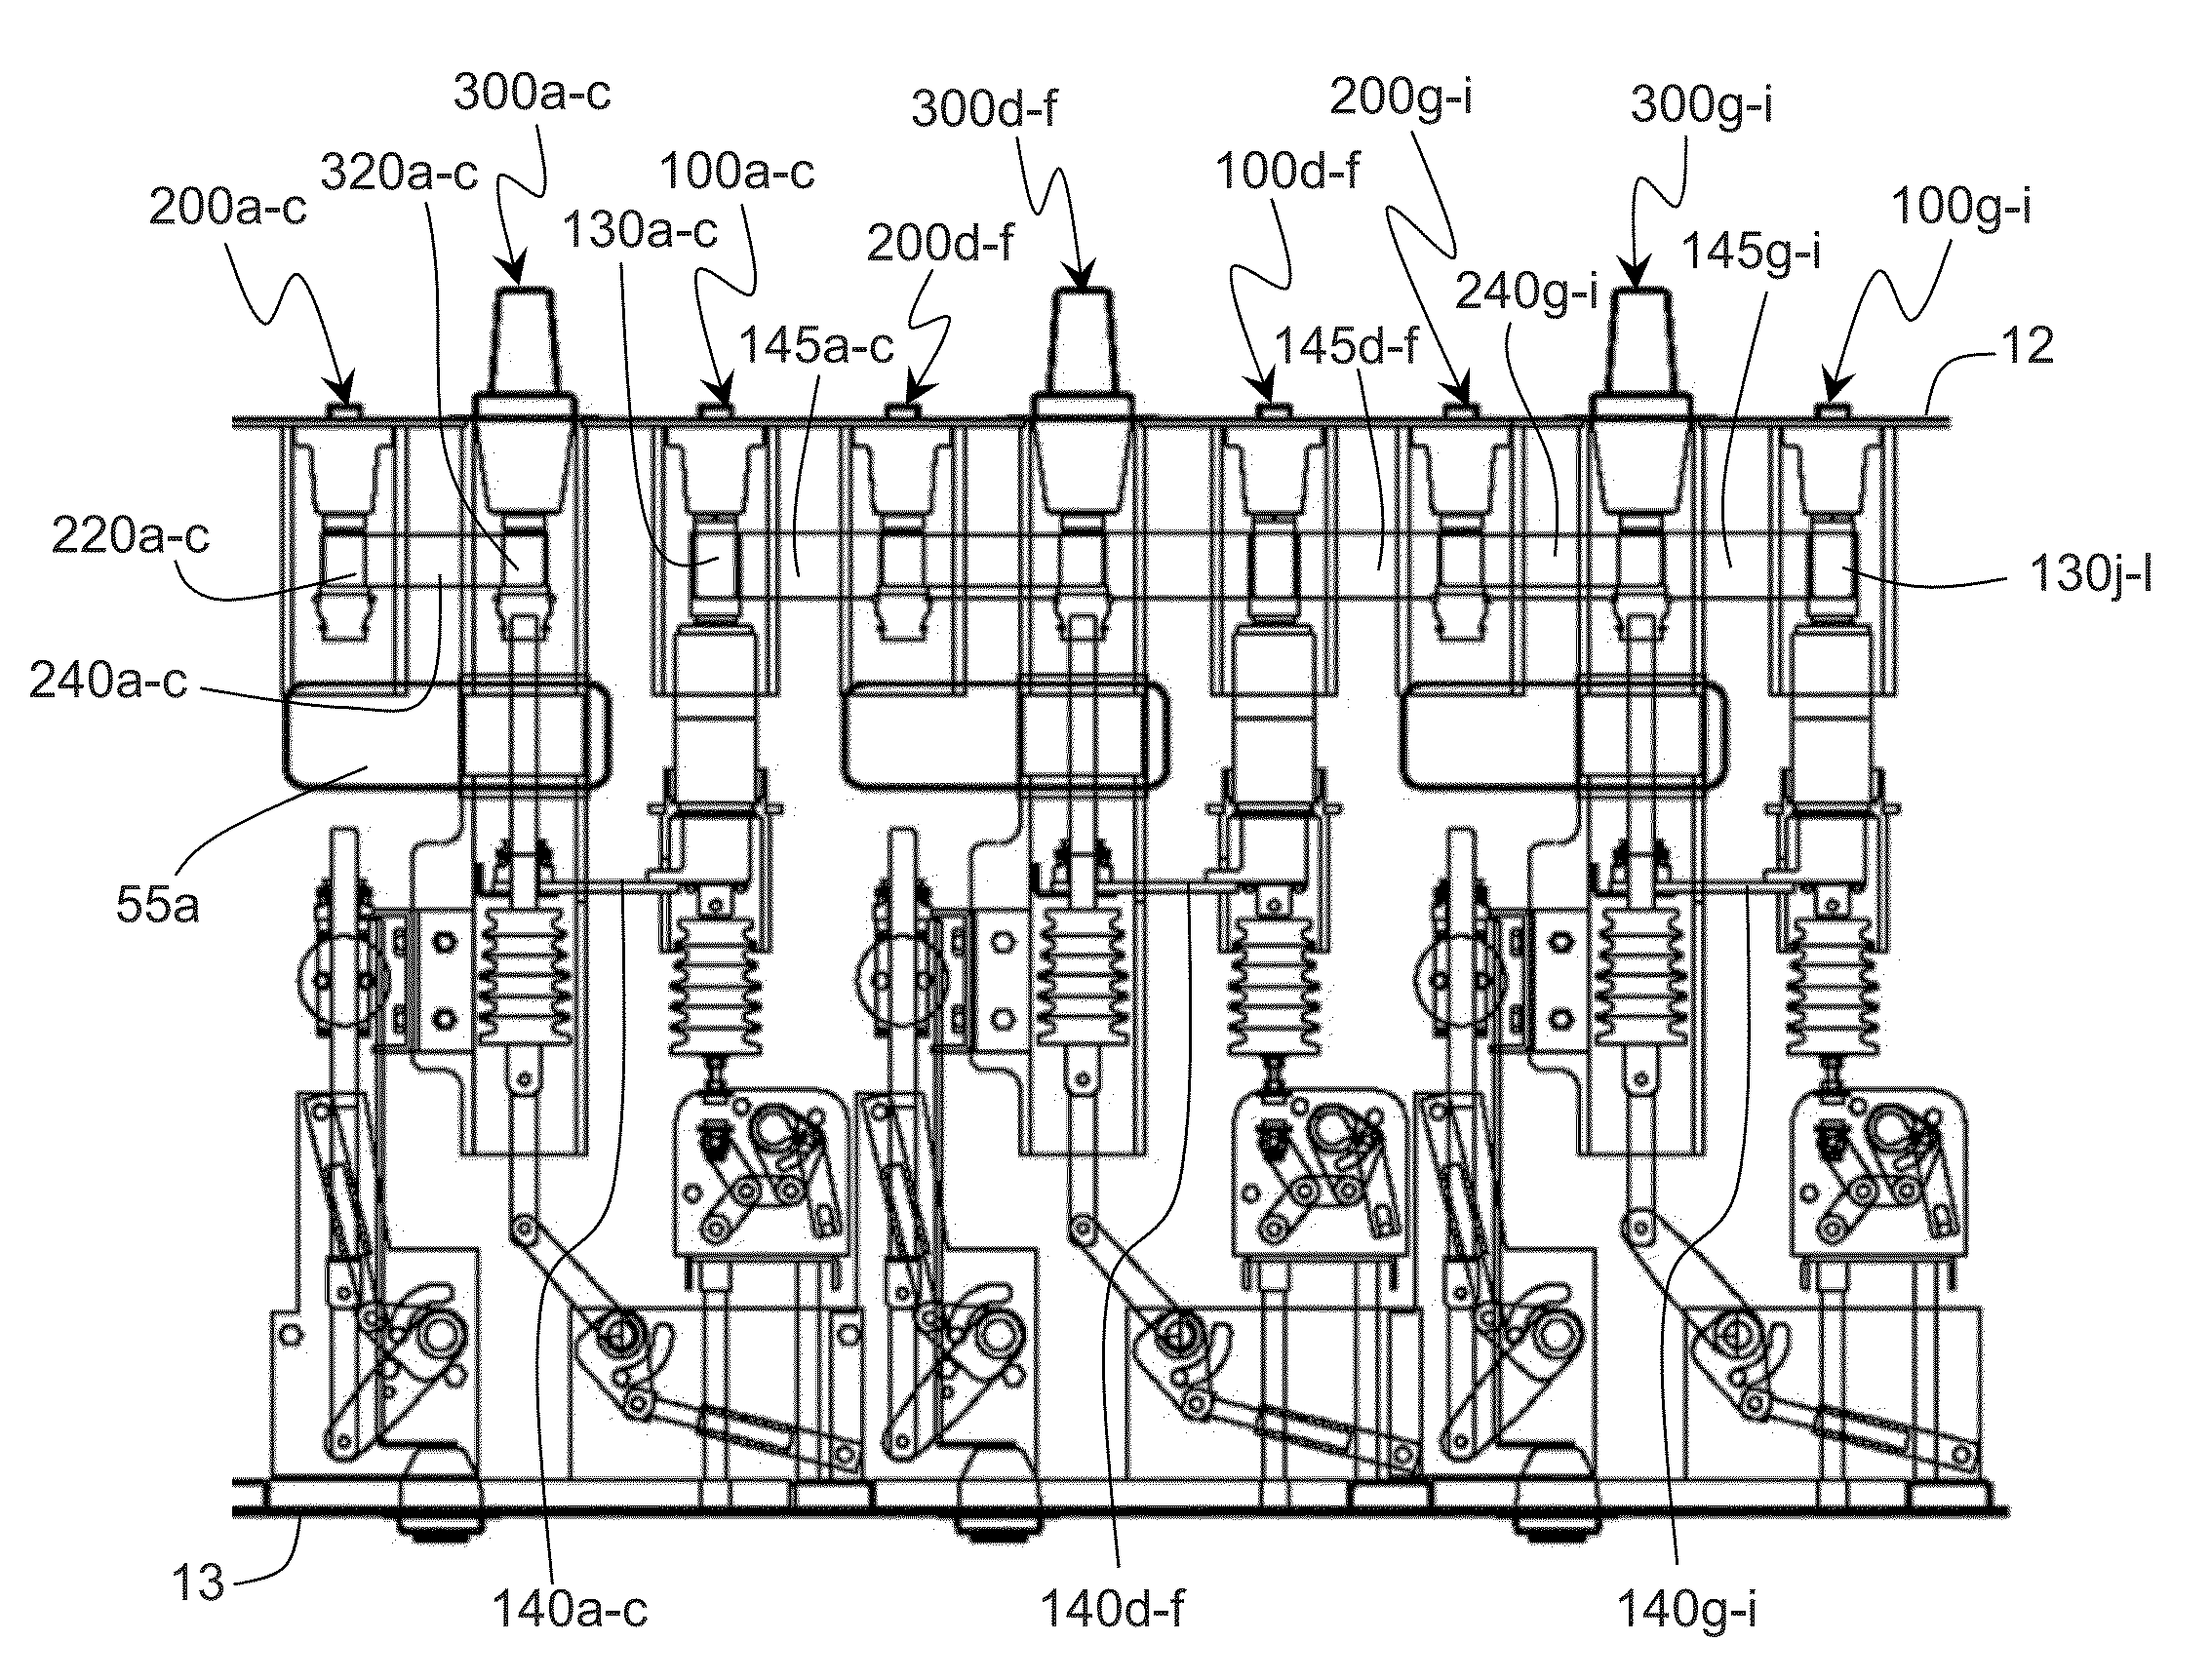 Three-phase, multi-way vacuum interrupter switchgear with internal ground switches